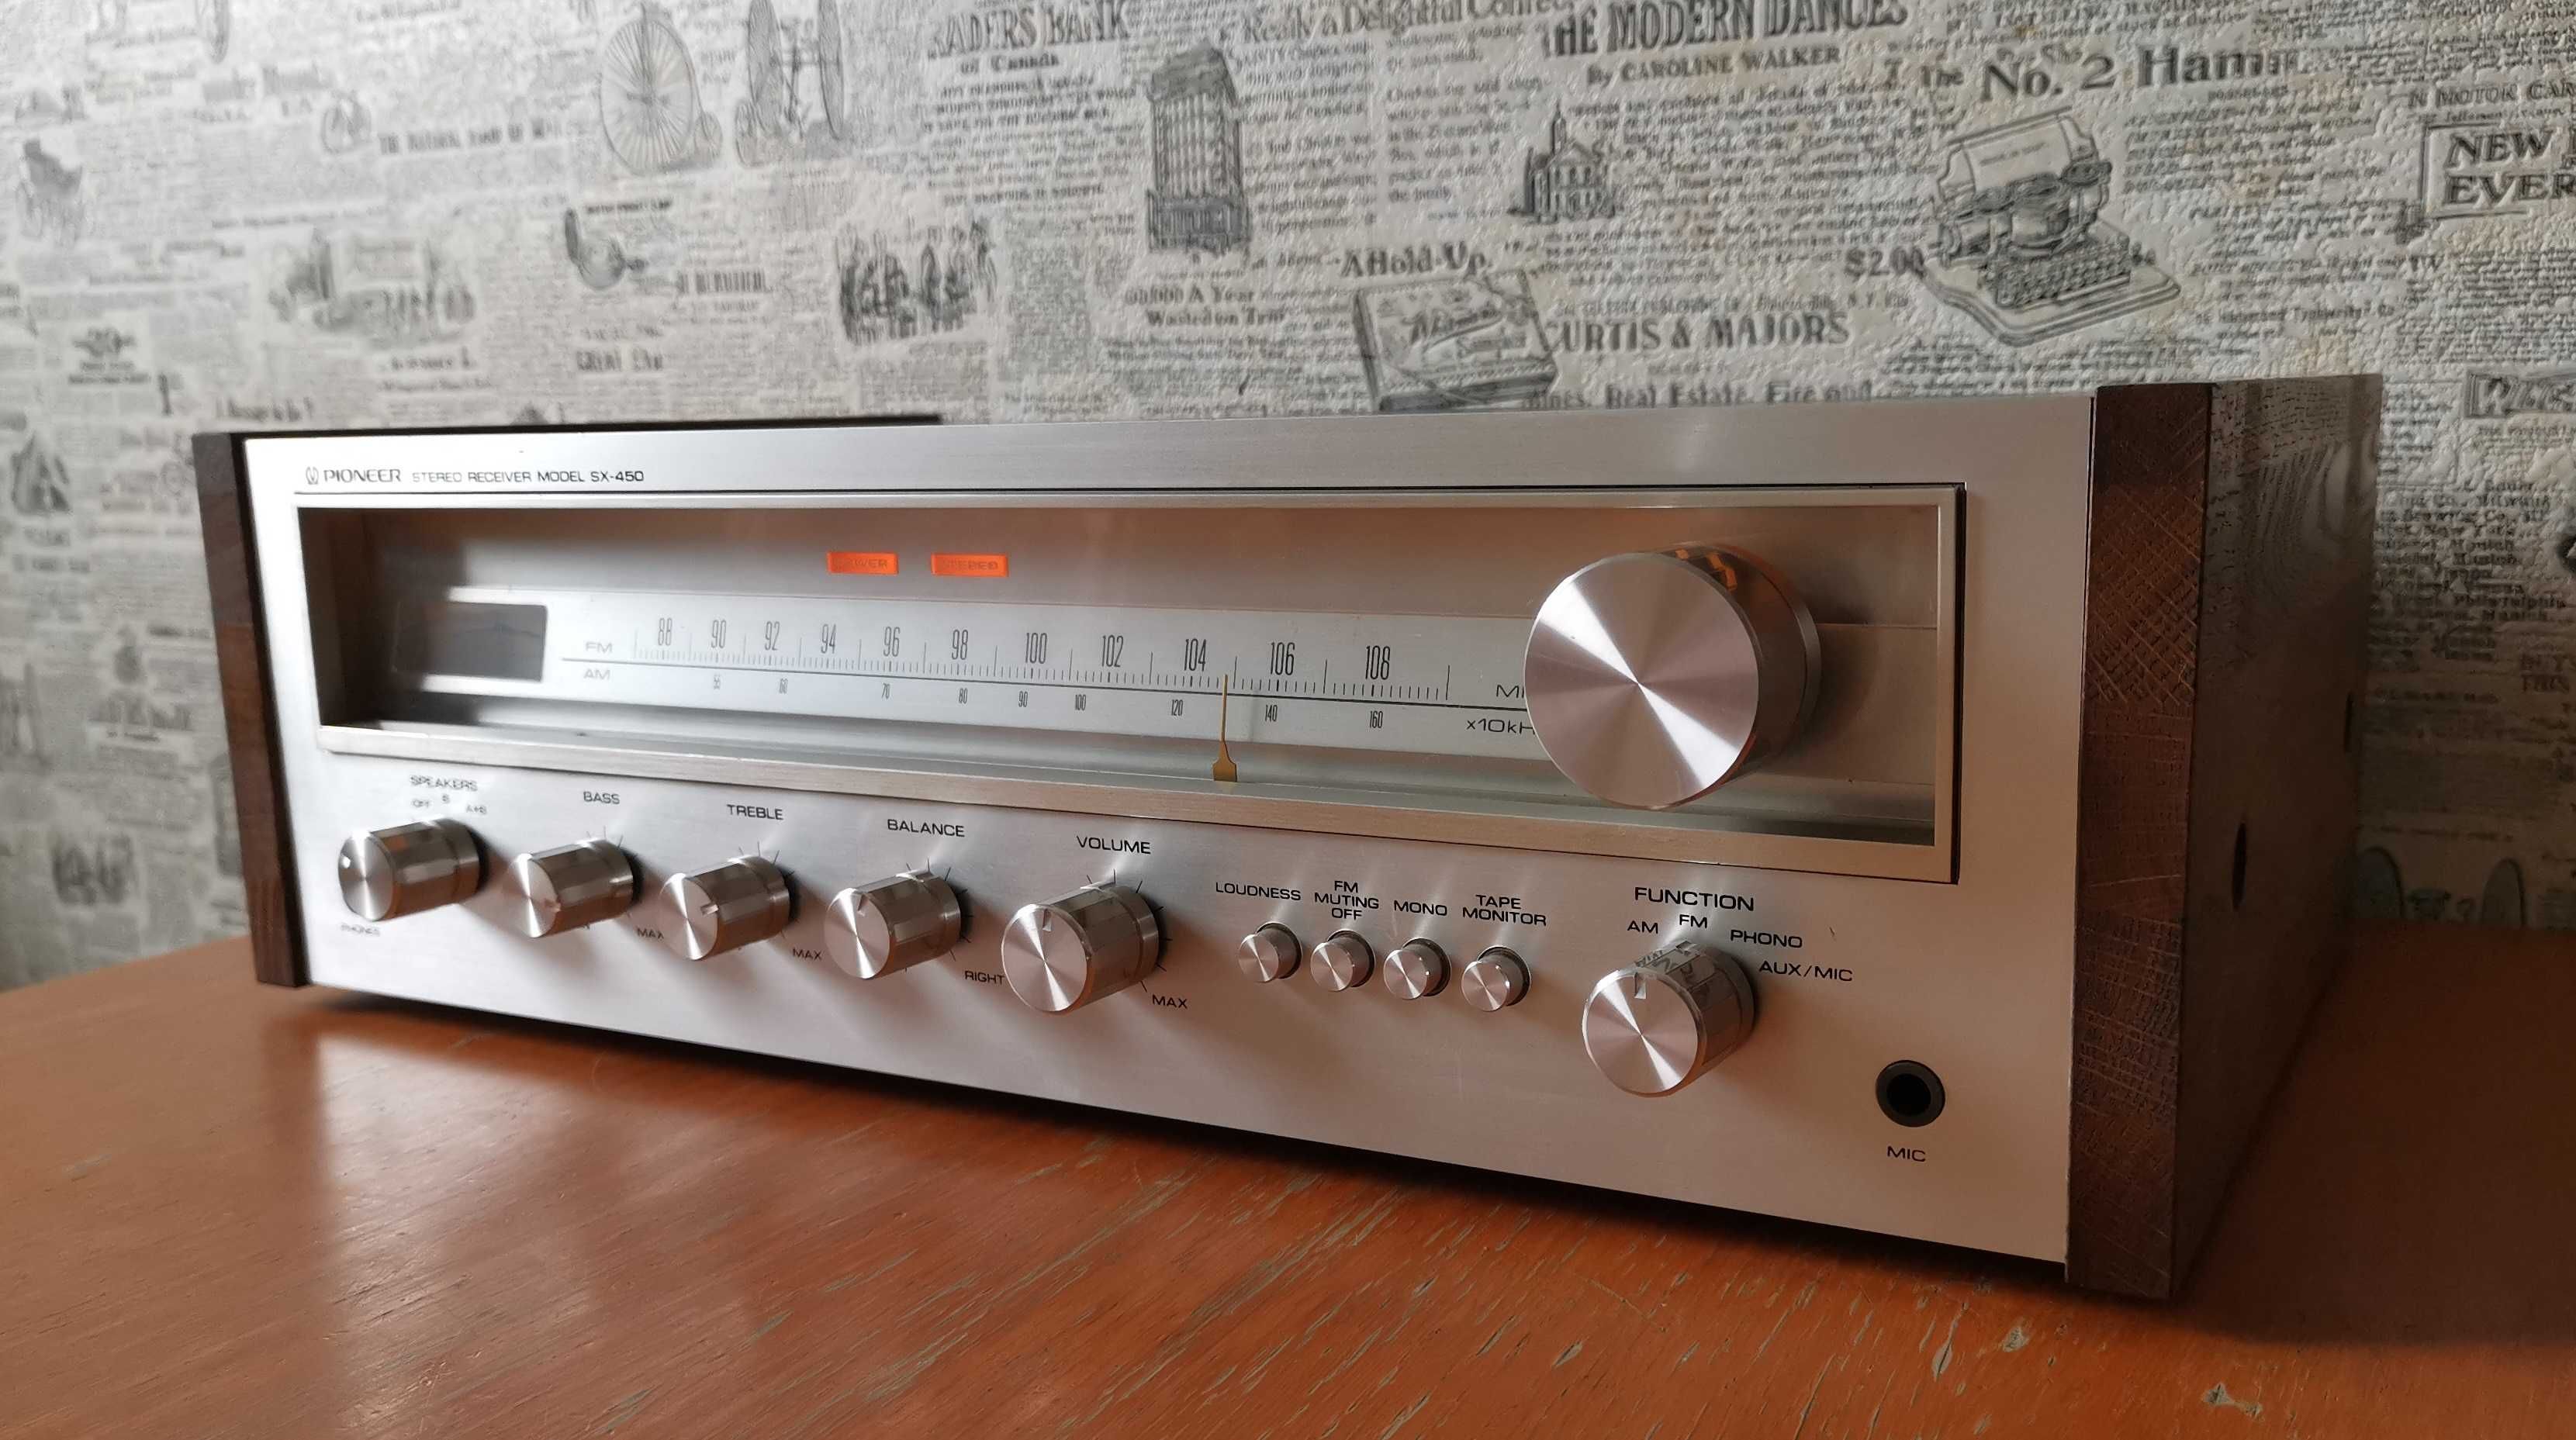 Amplituner stereo Pioneer SX-450 Vintage